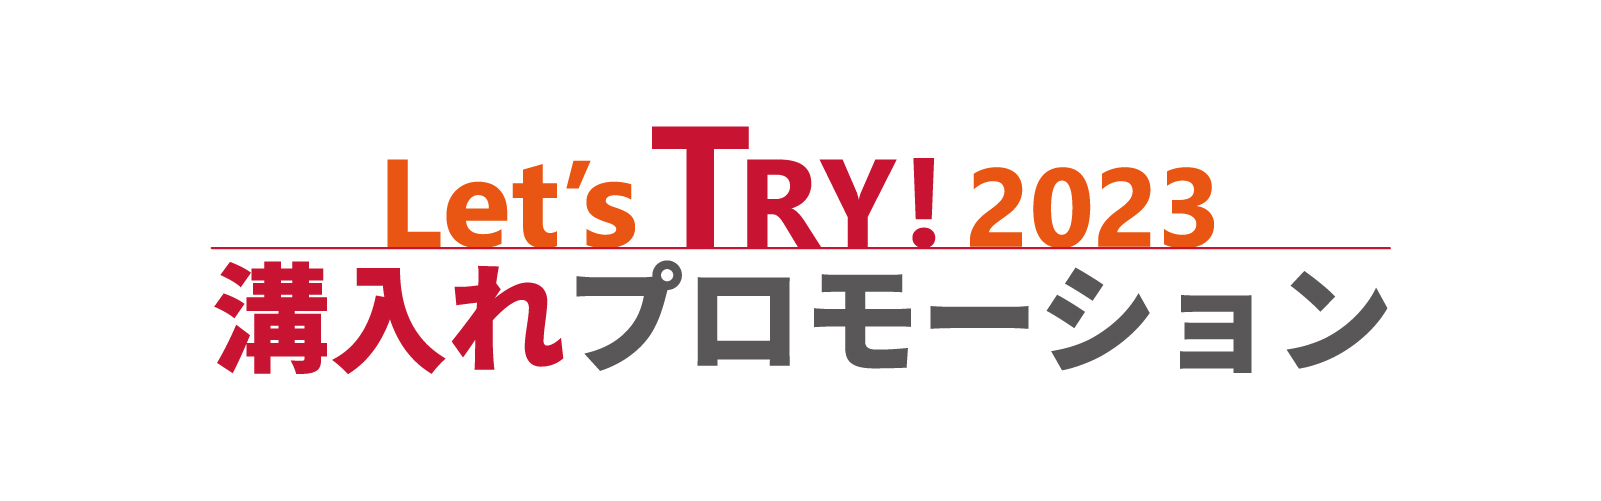 Let's TRY! 2023 溝入れプロモーション_TungCut - 株式会社タンガロイ